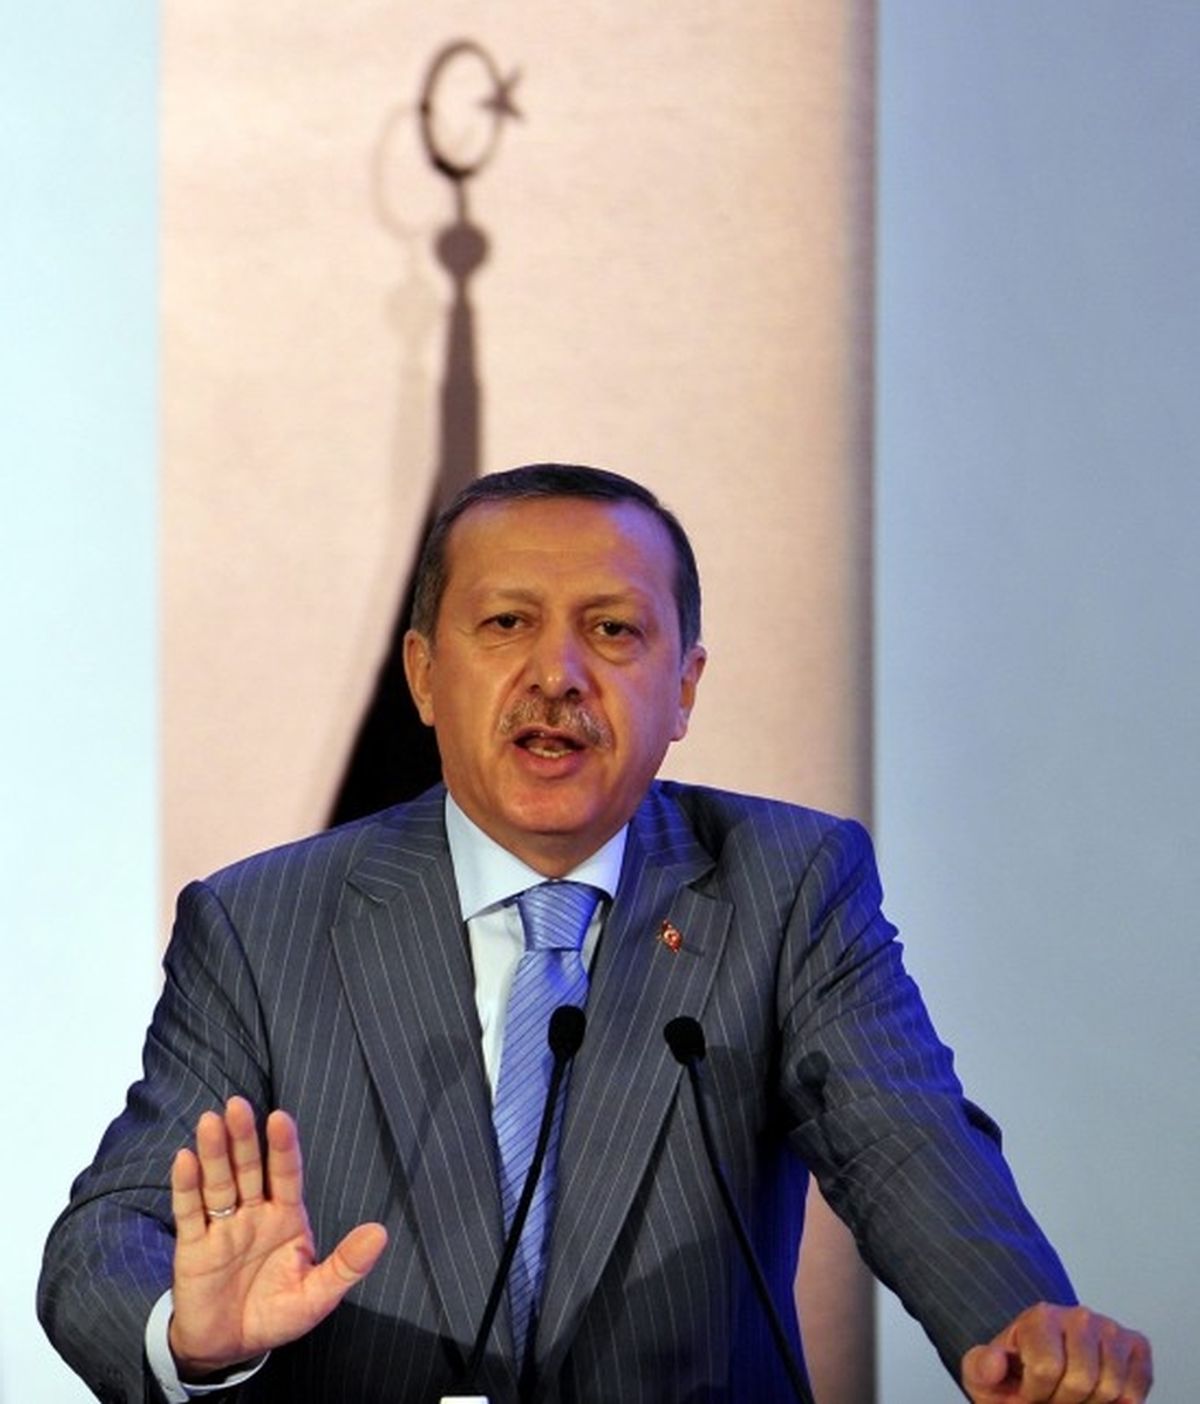 El primer ministro turco, Recep Tayyip Erdogan